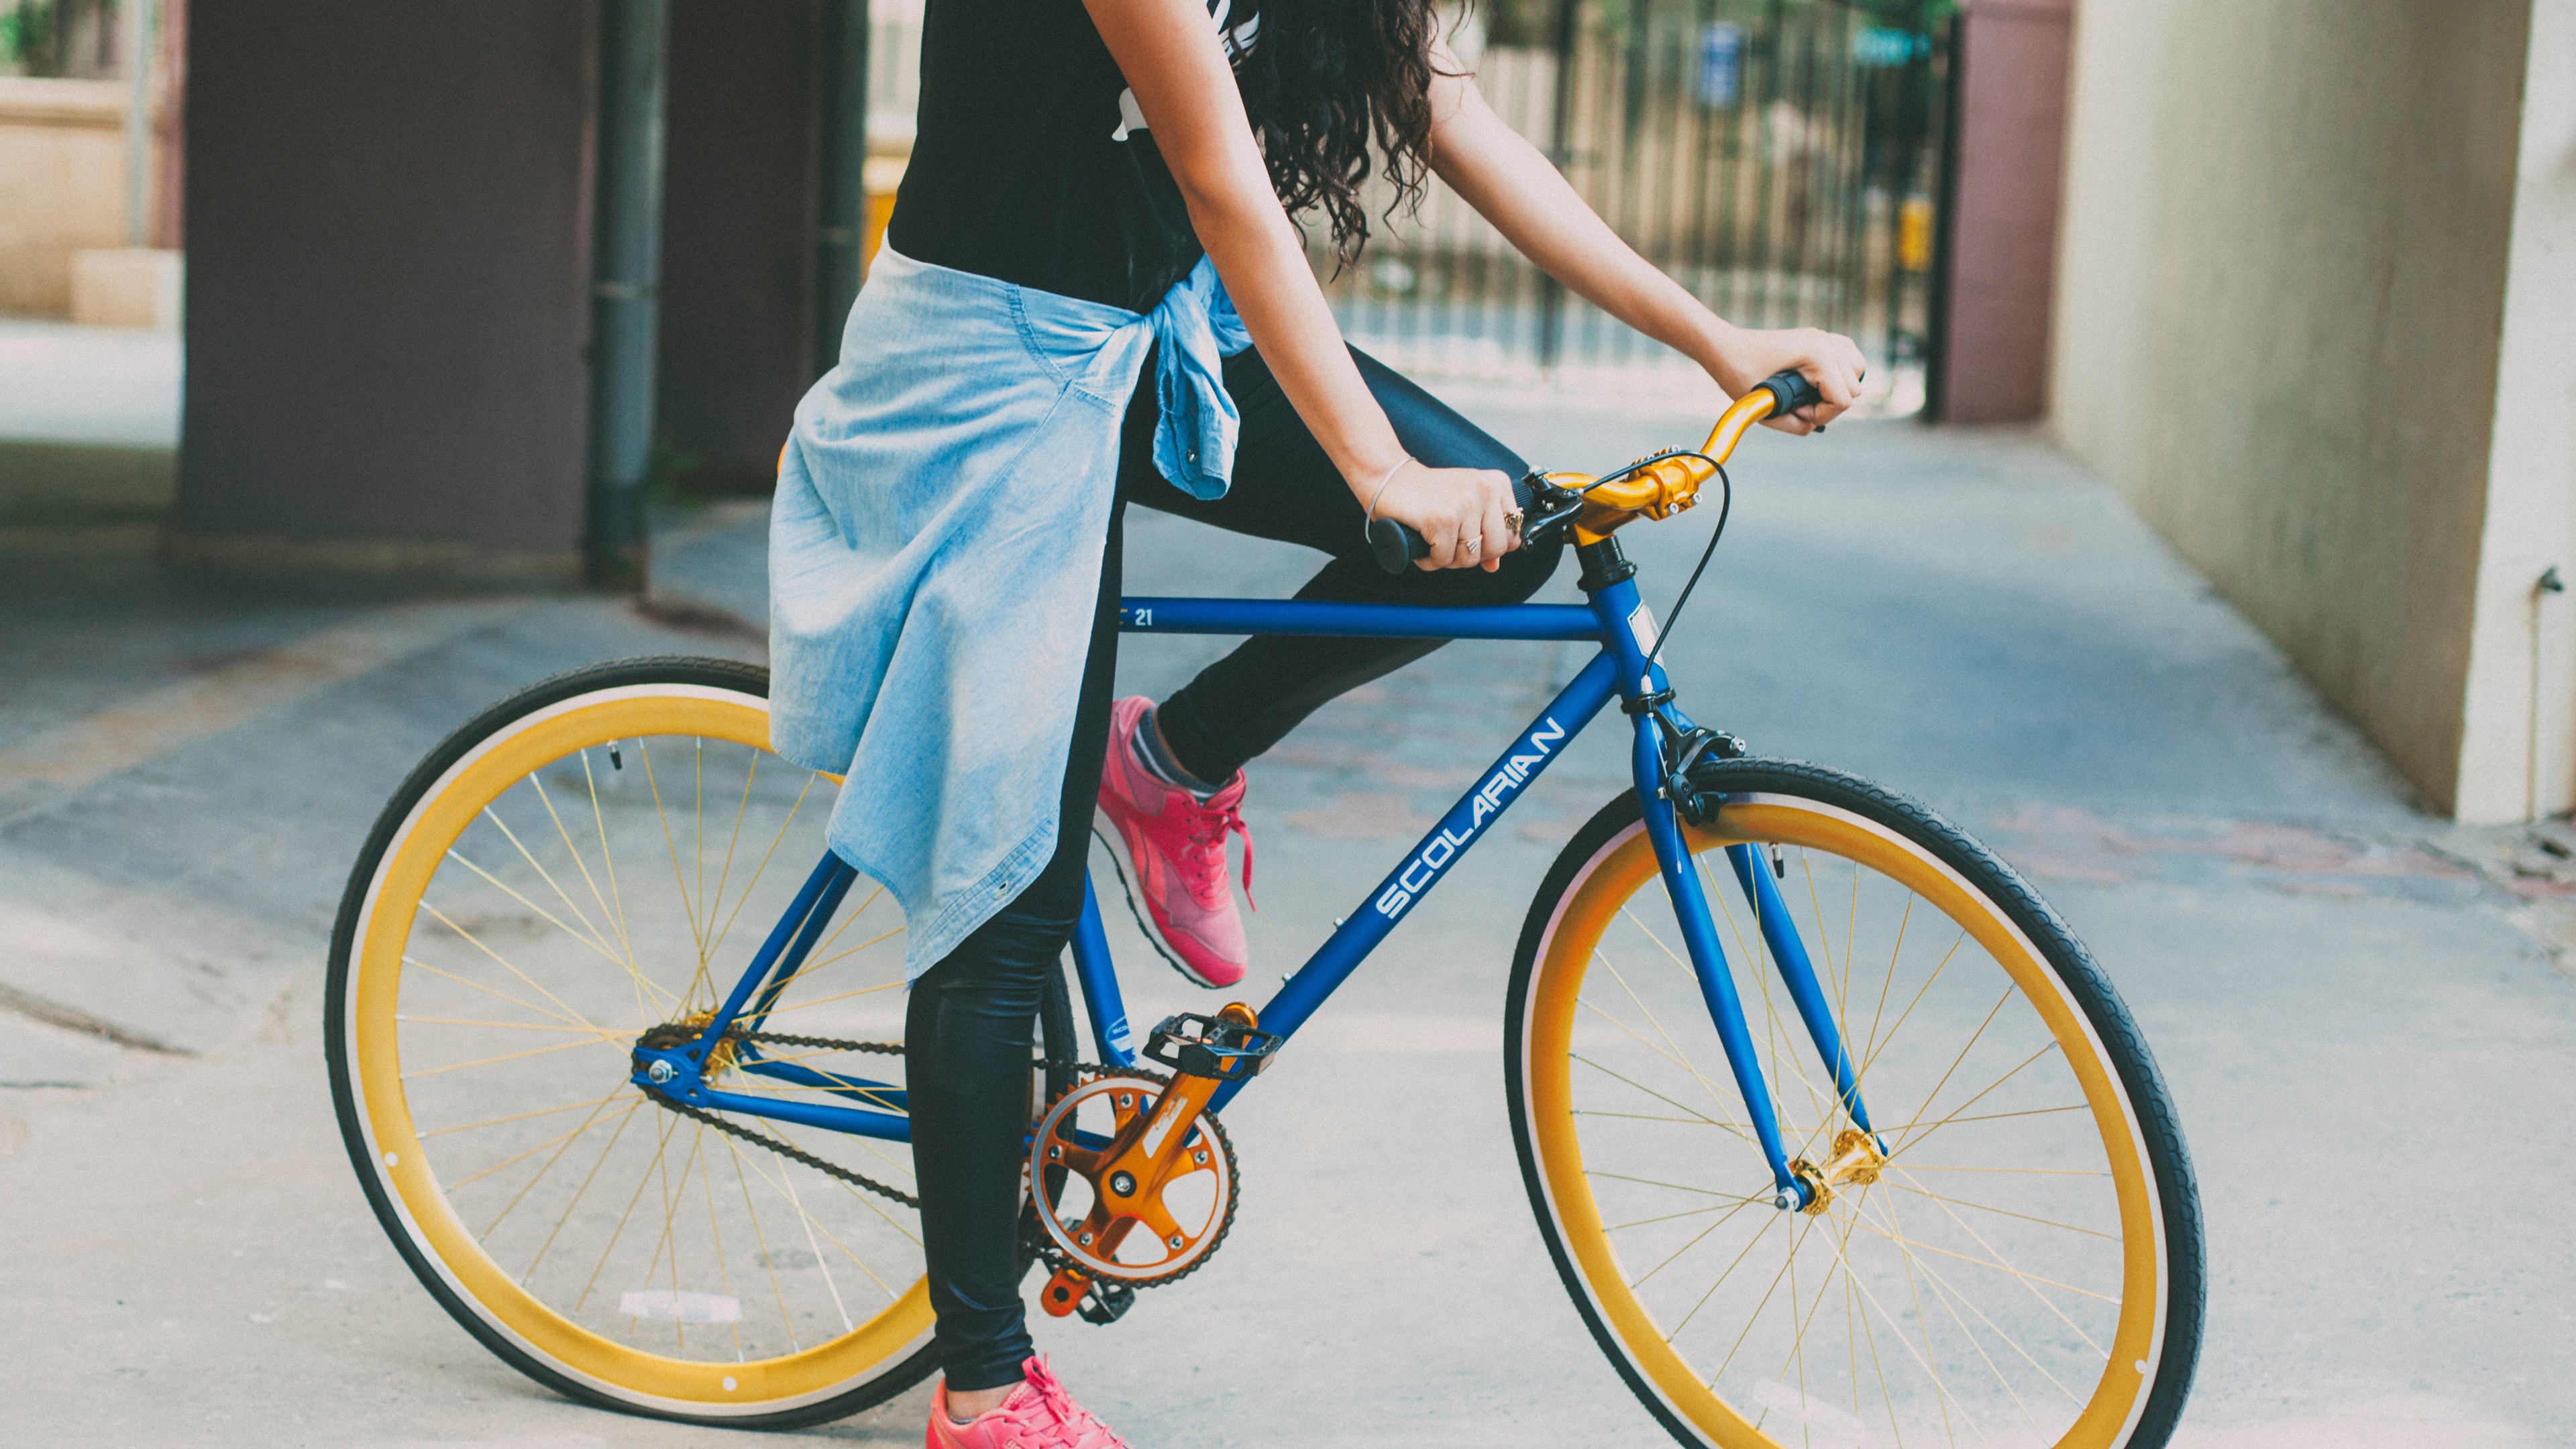 Wallpaper Girl And Bike - Girl In Bike 4k - 3840x2160 Wallpaper 